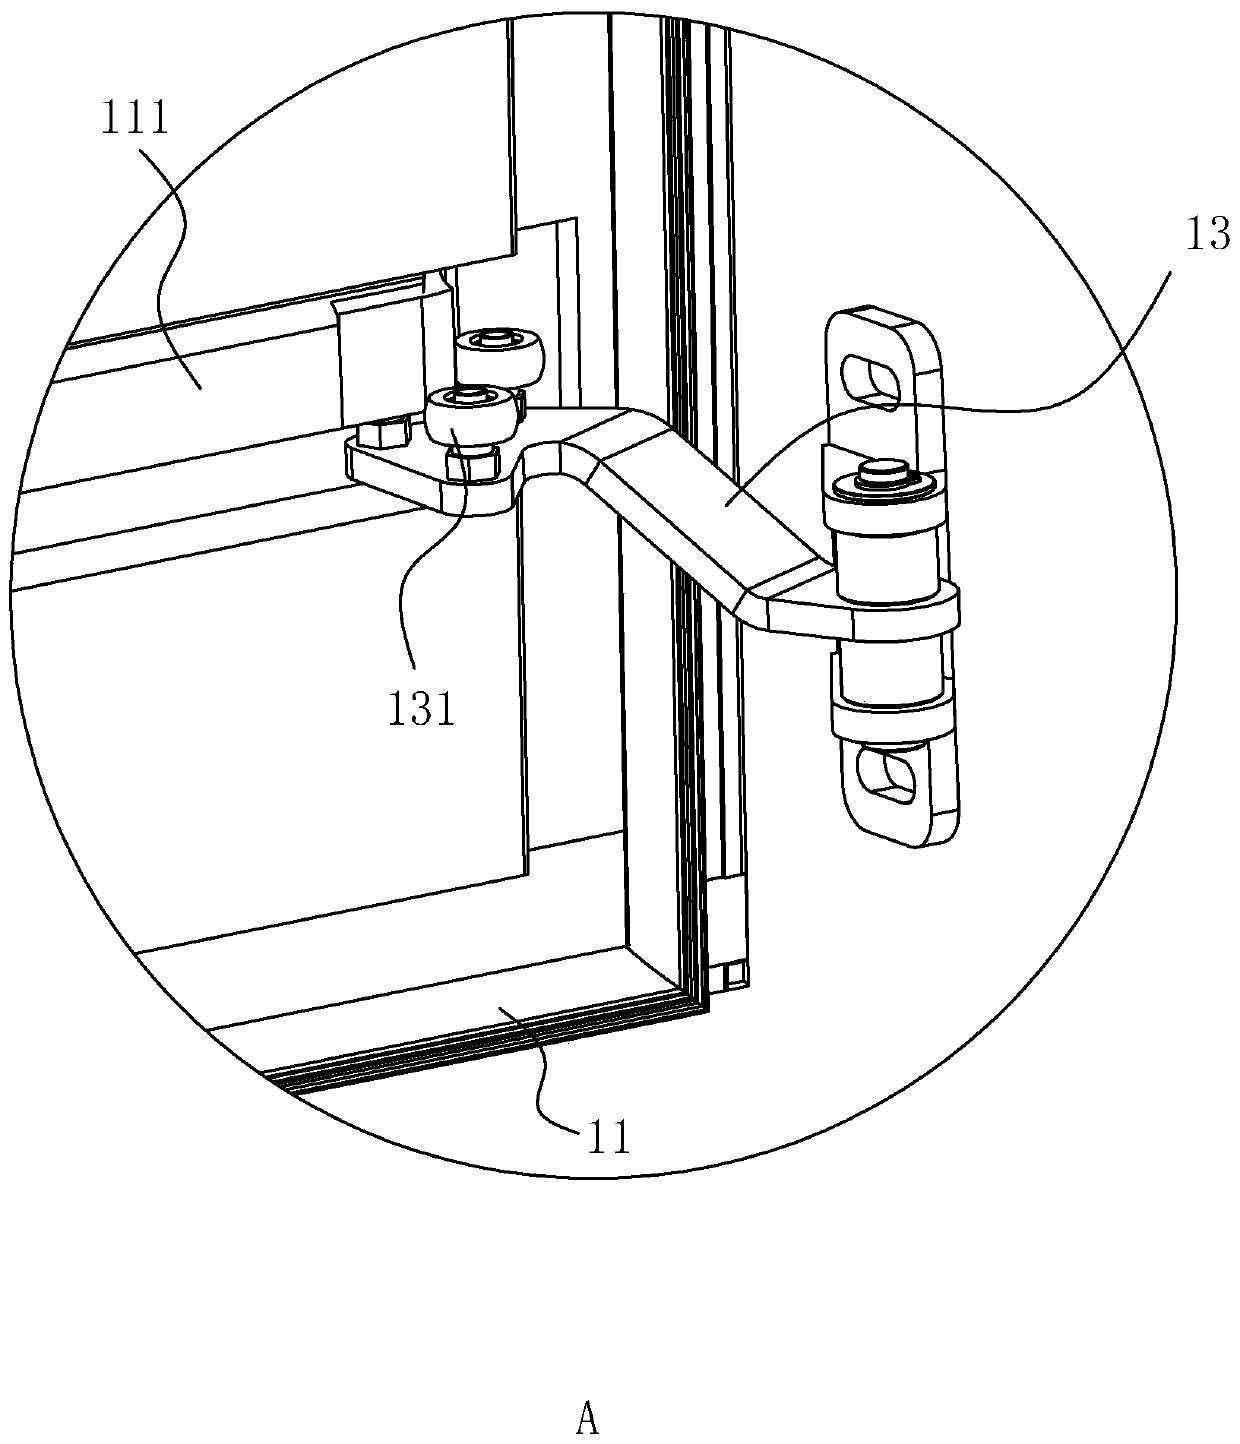 Guide-column-free sliding plug door mechanism